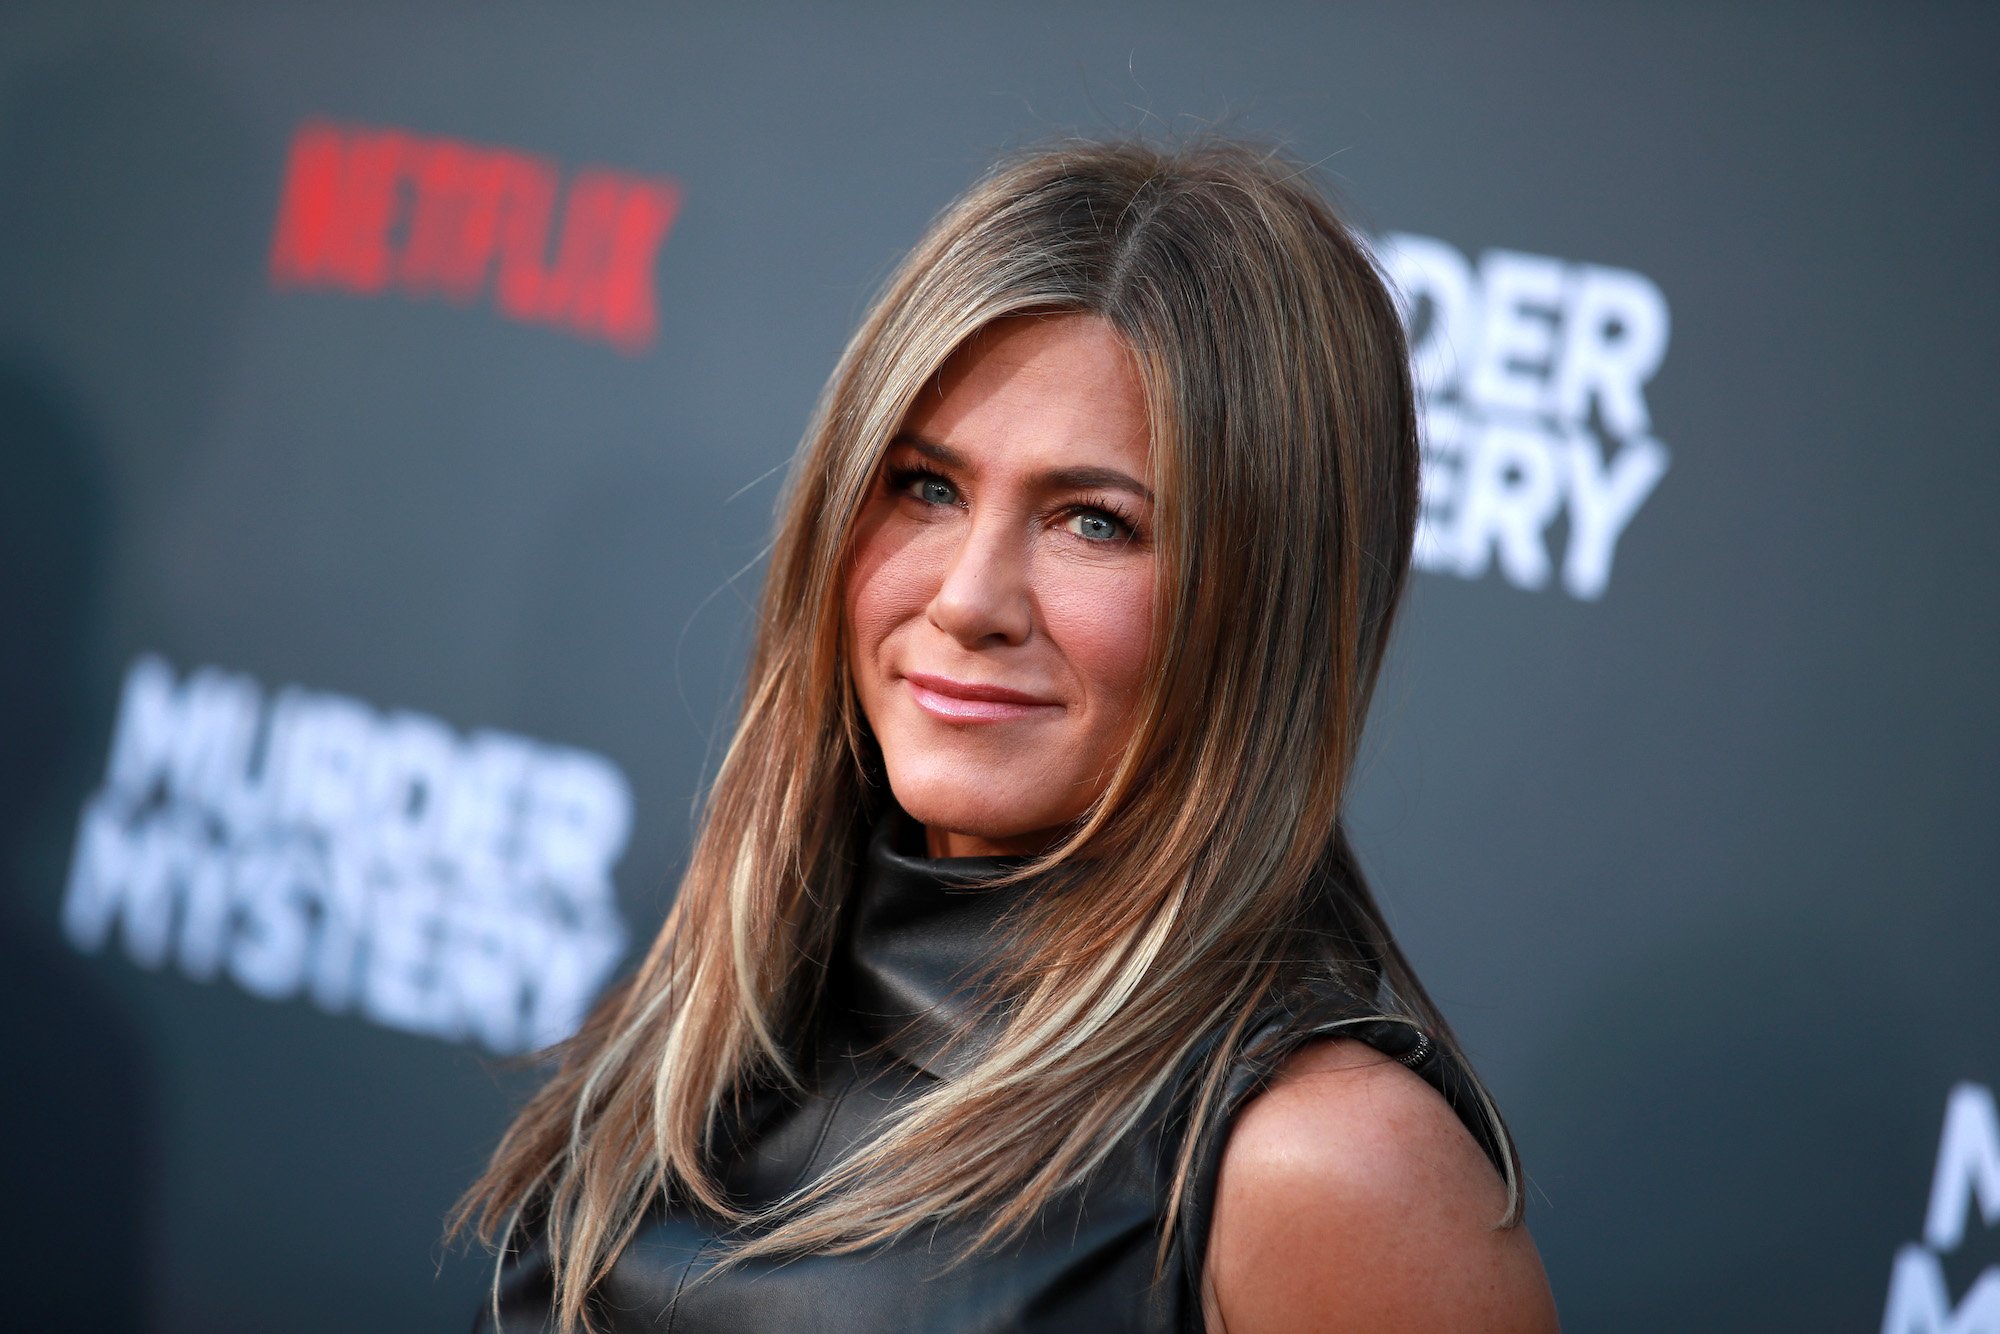 Jennifer Aniston attending the LA Premiere Of Netflix's "Murder Mystery"